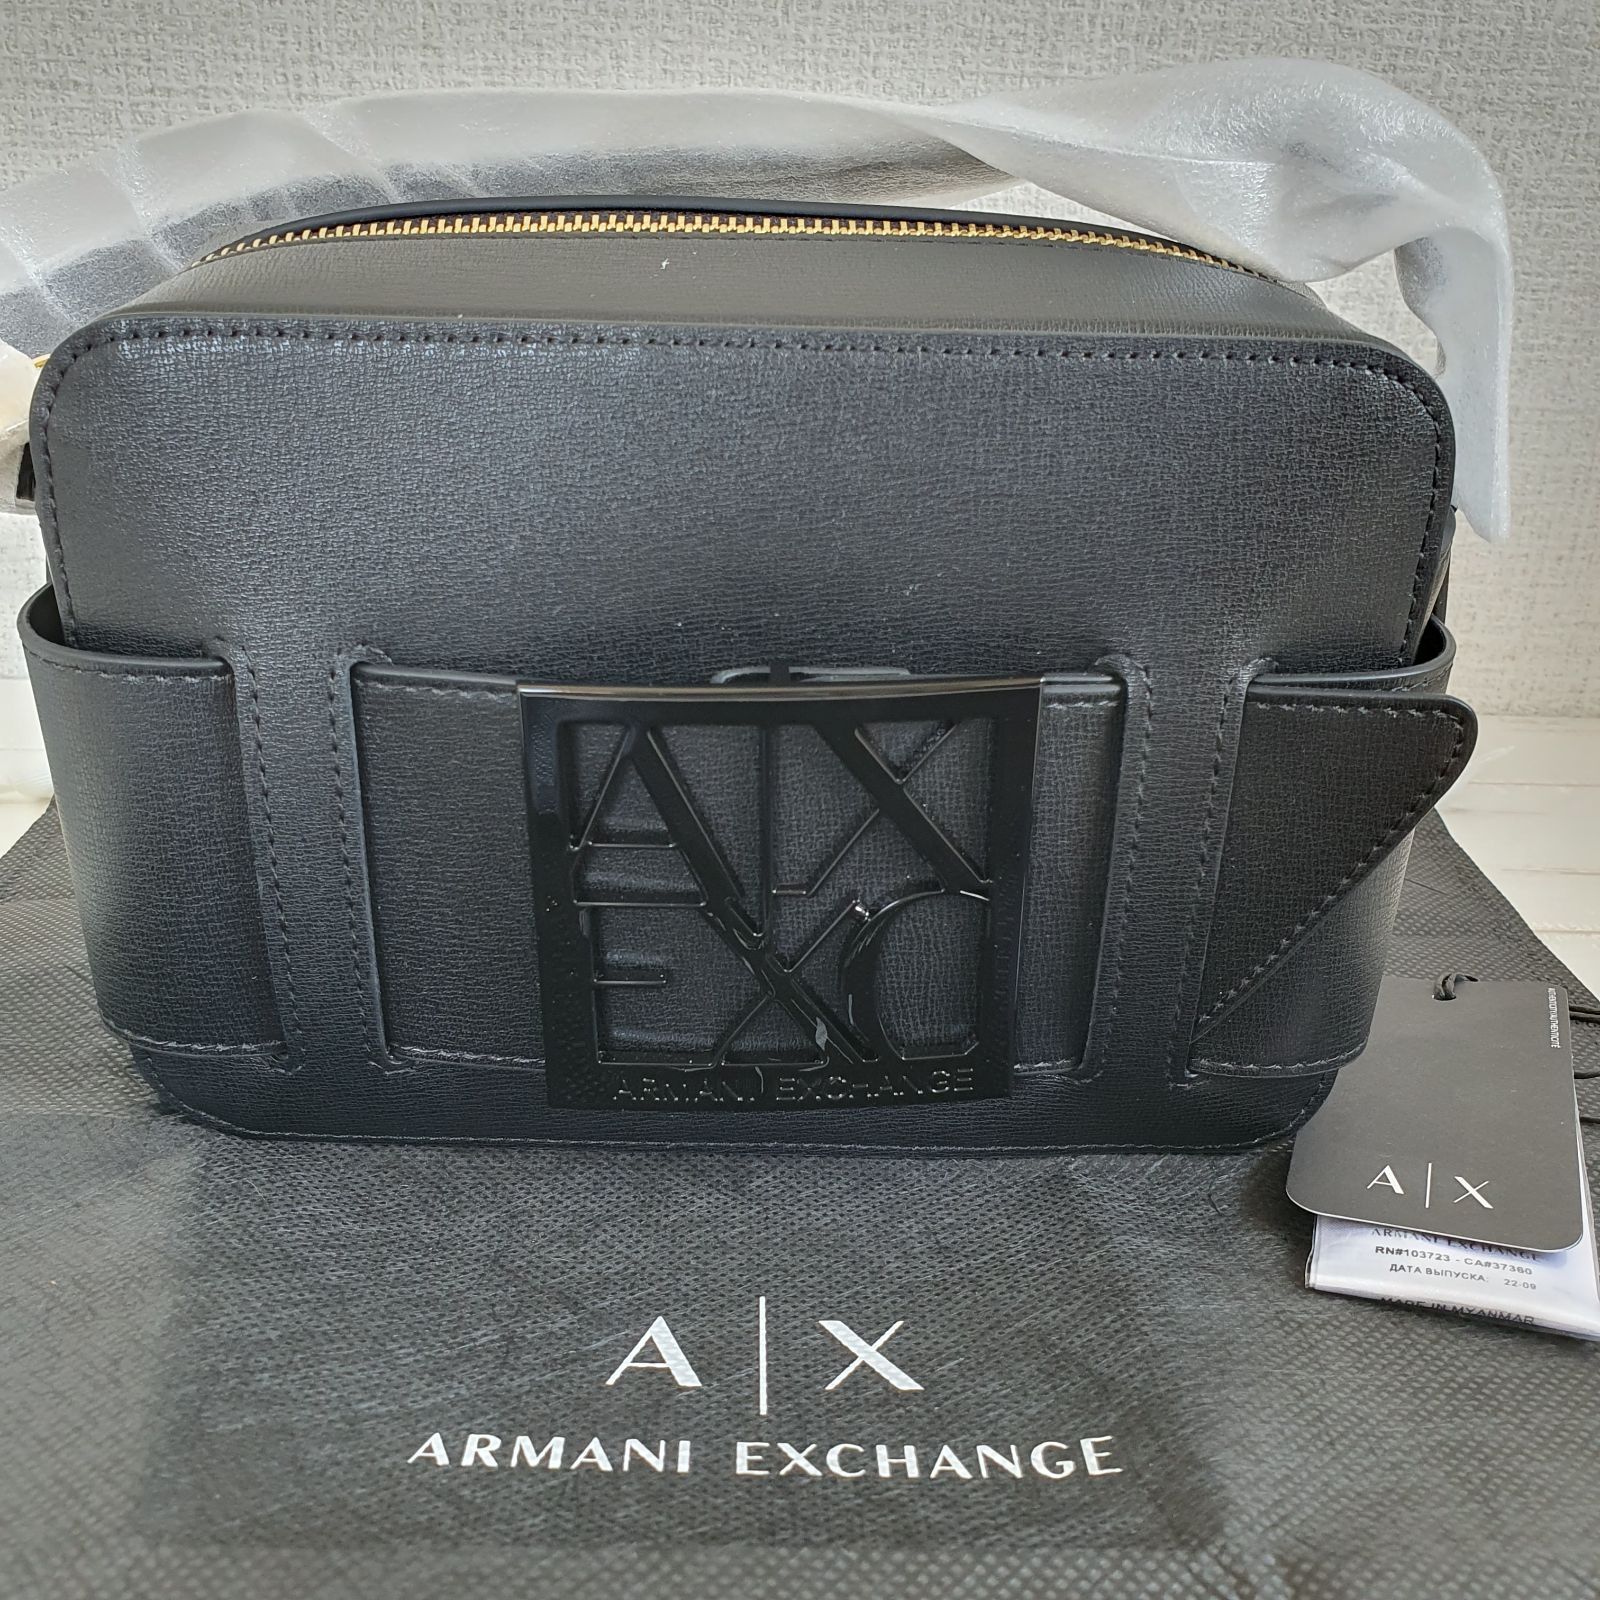 ARMANI EXCHANG アルマーニ エクスチェンジ A|X 未使用 新品